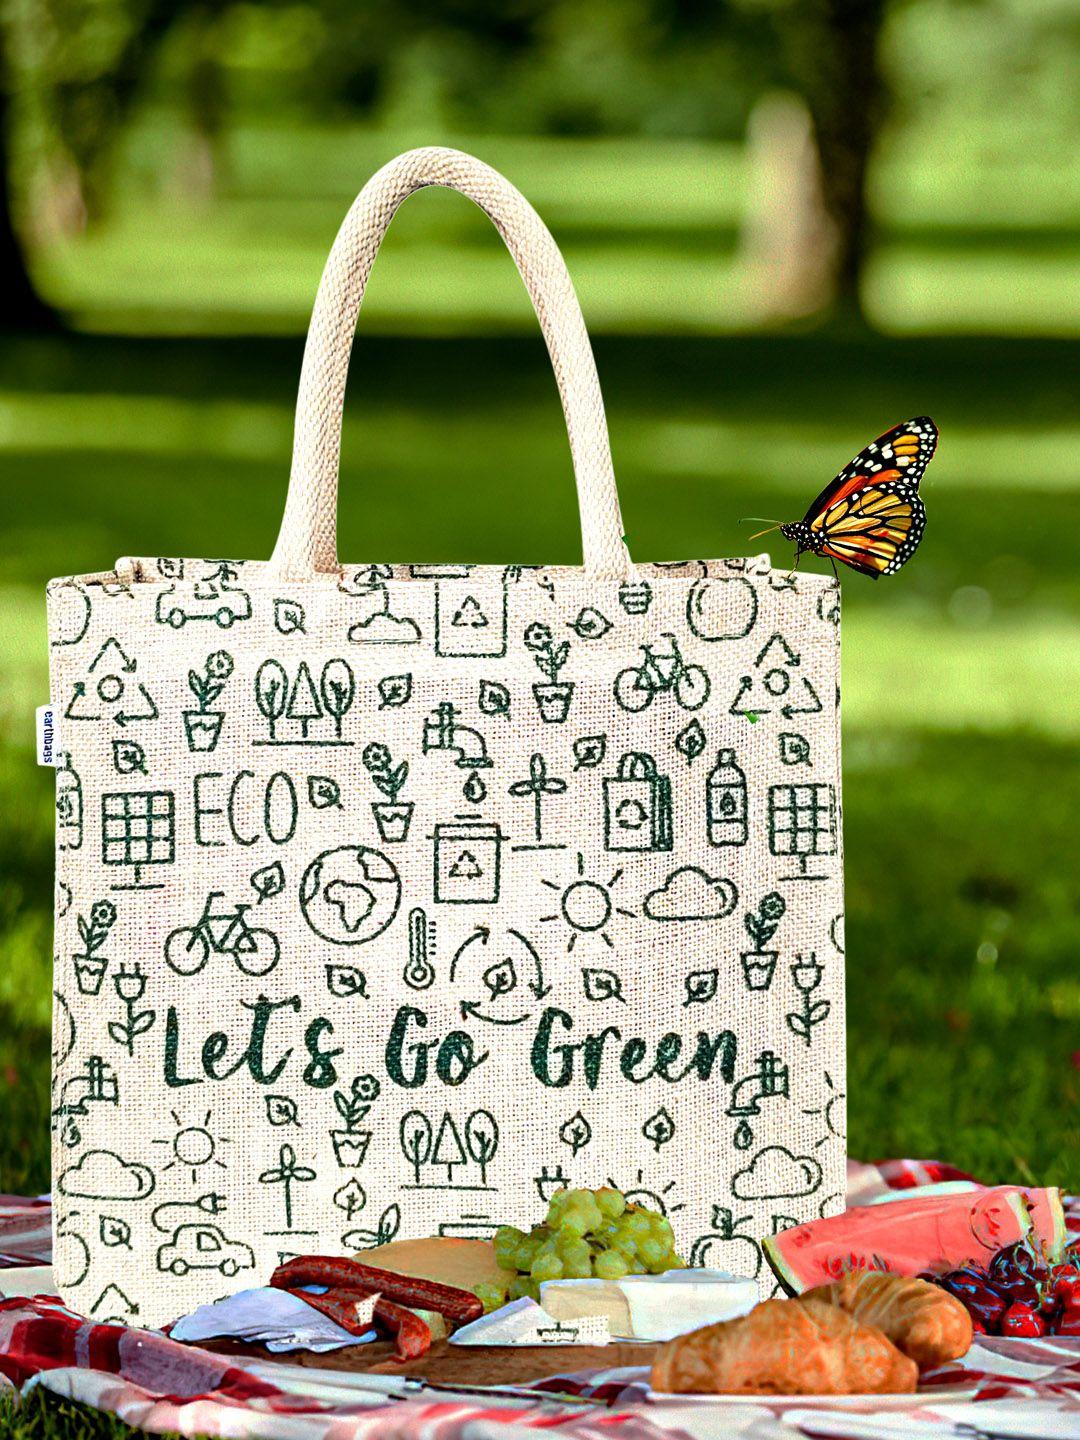 earthbags graphic printed oversized jute tote bag handbags